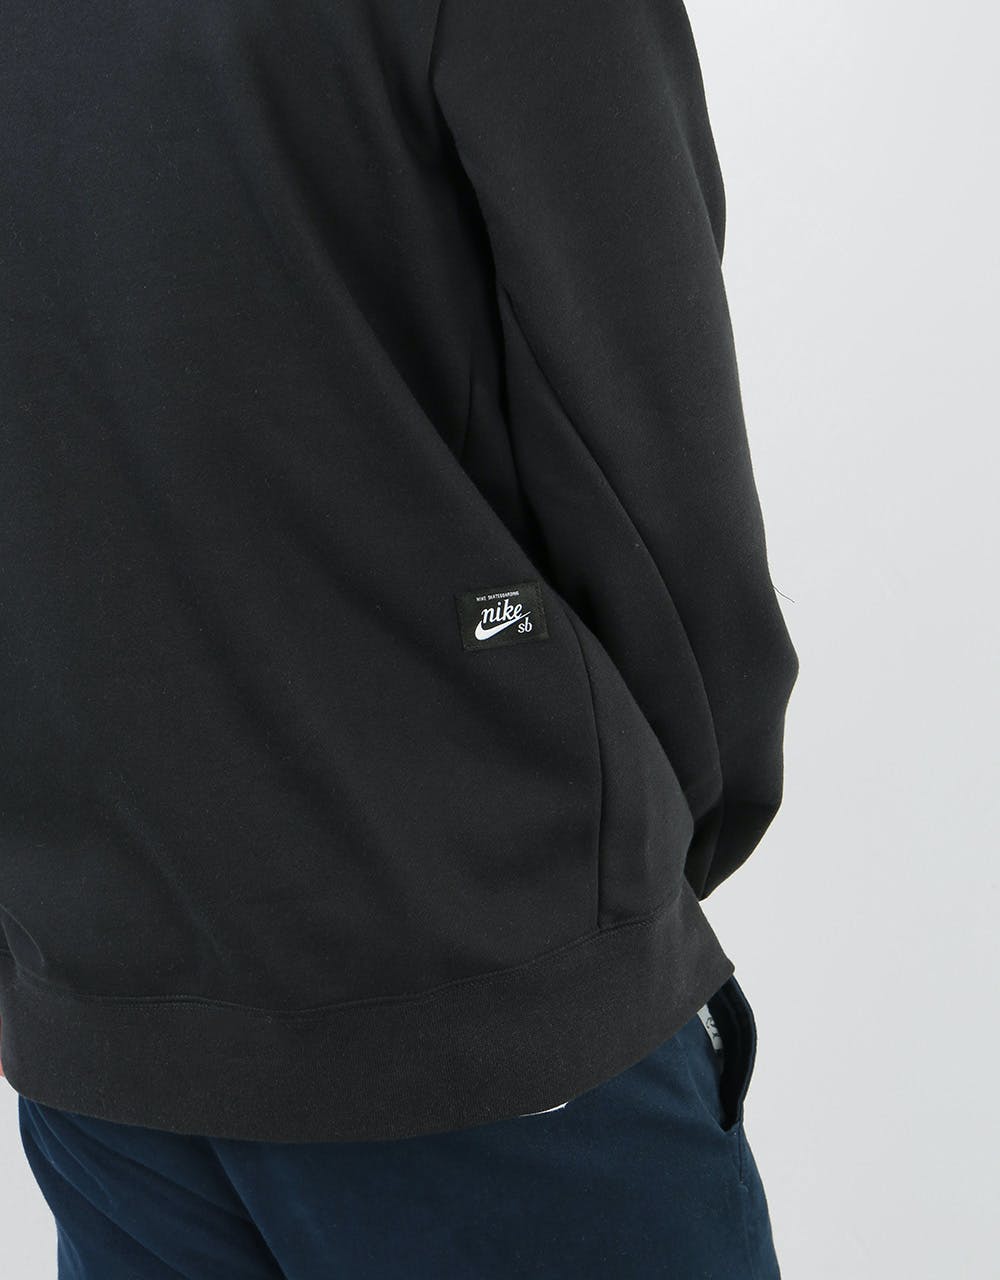 Nike SB Craft Icon Sweatshirt - Black/White